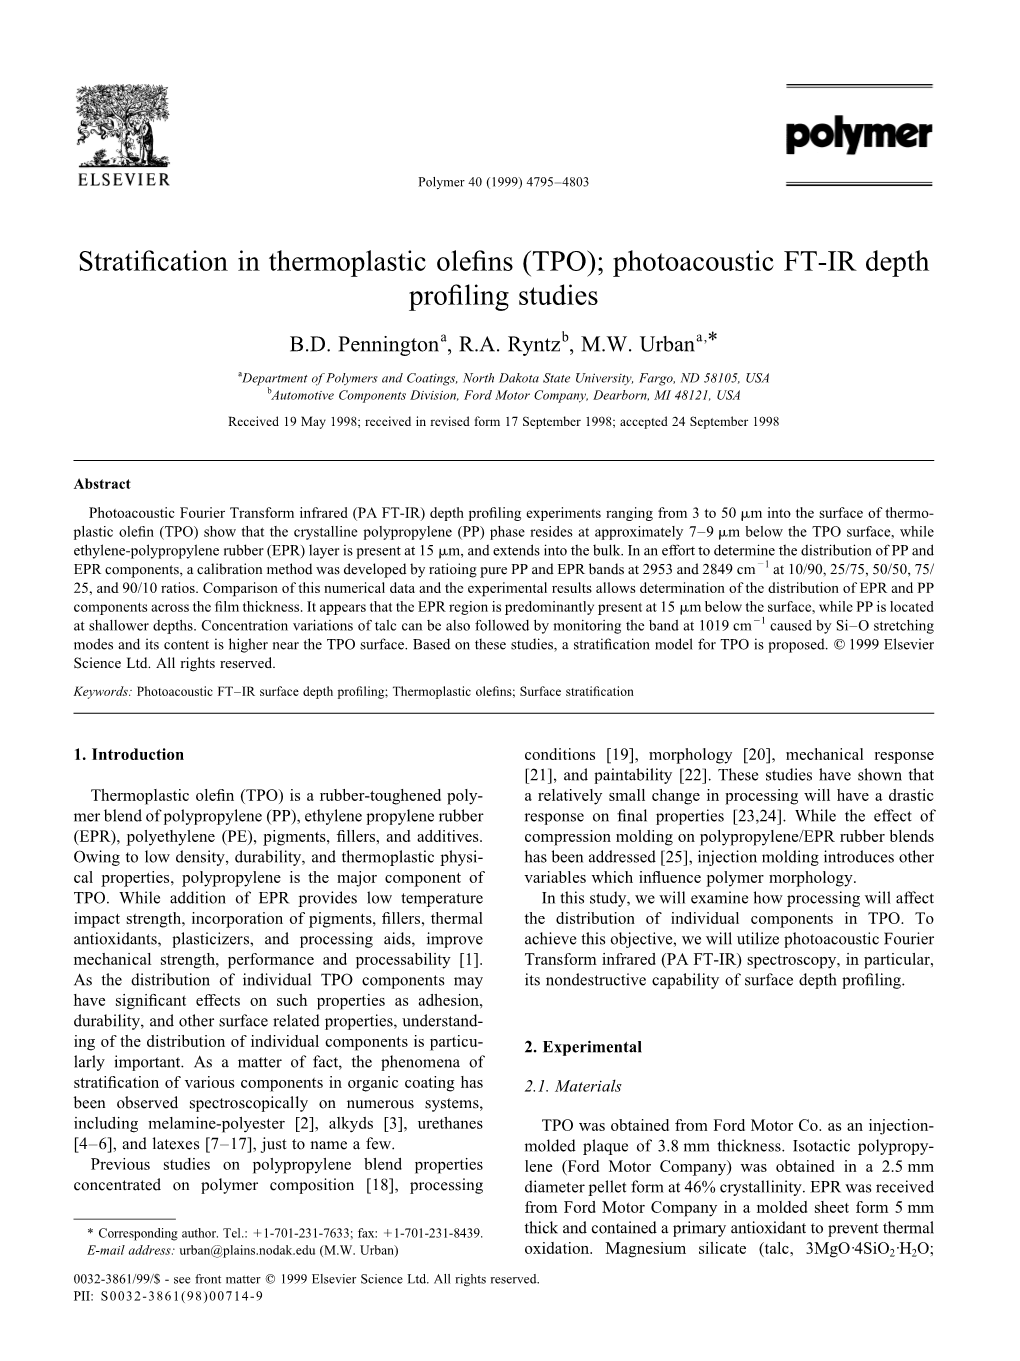 (TPO); Photoacoustic FT-IR Depth Profiling Studies